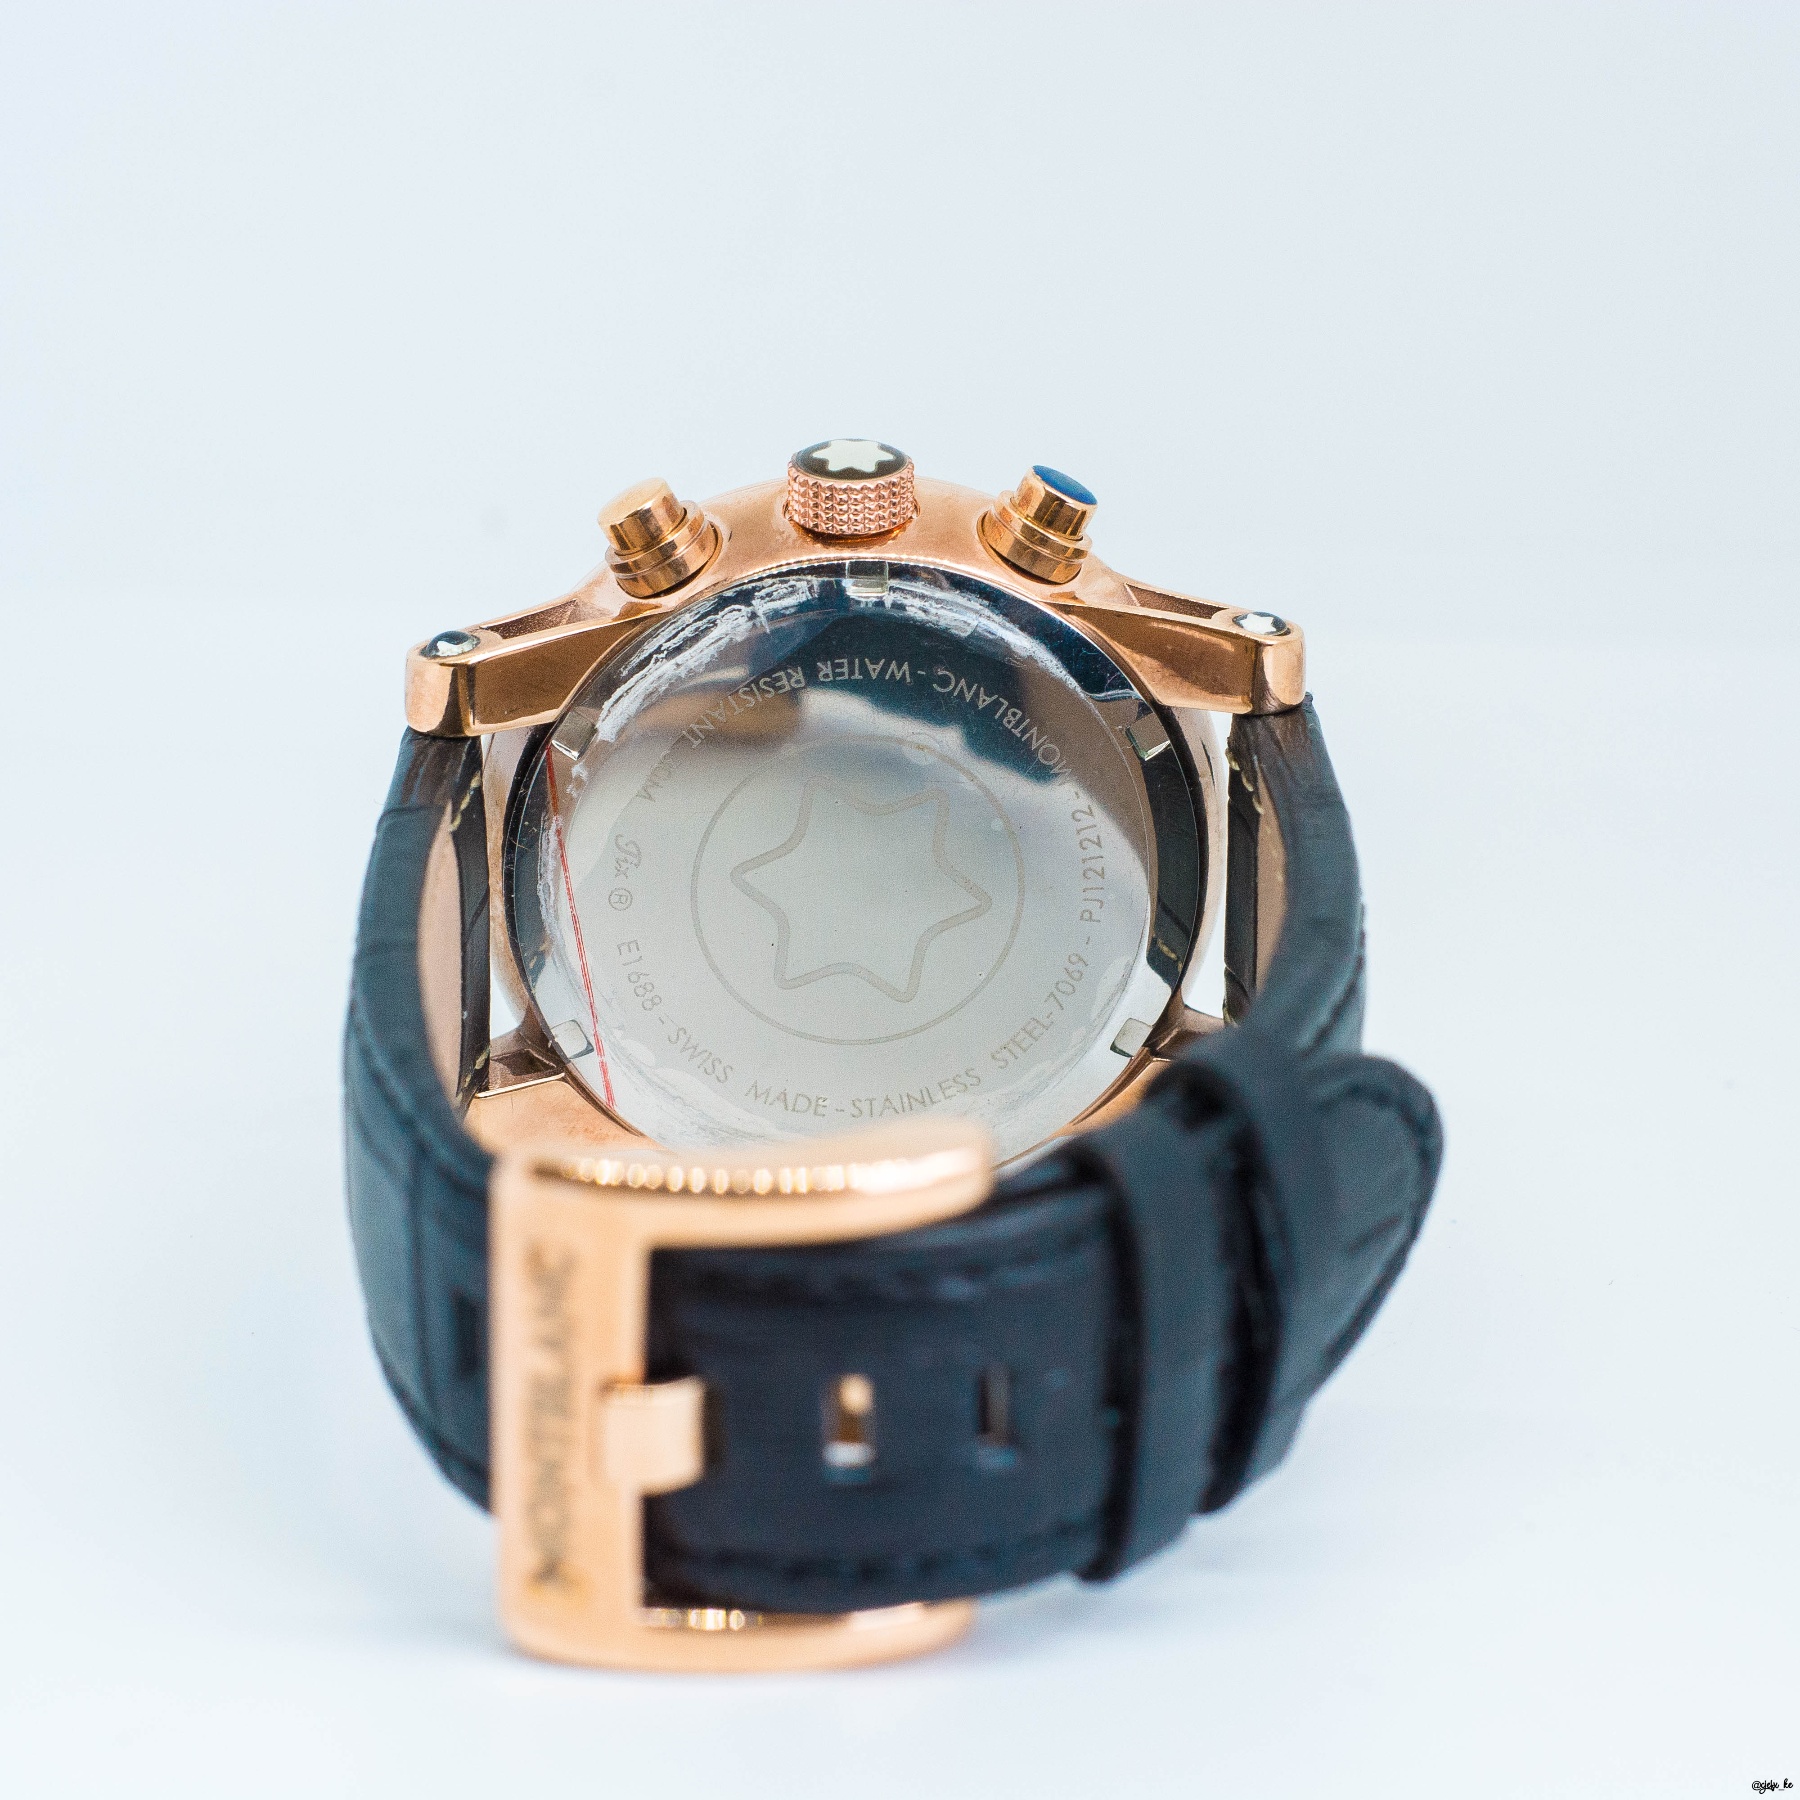 Buy this Mont blanc Time walker Chronograph Watch at Trendsasa in Nairobi,Kenya